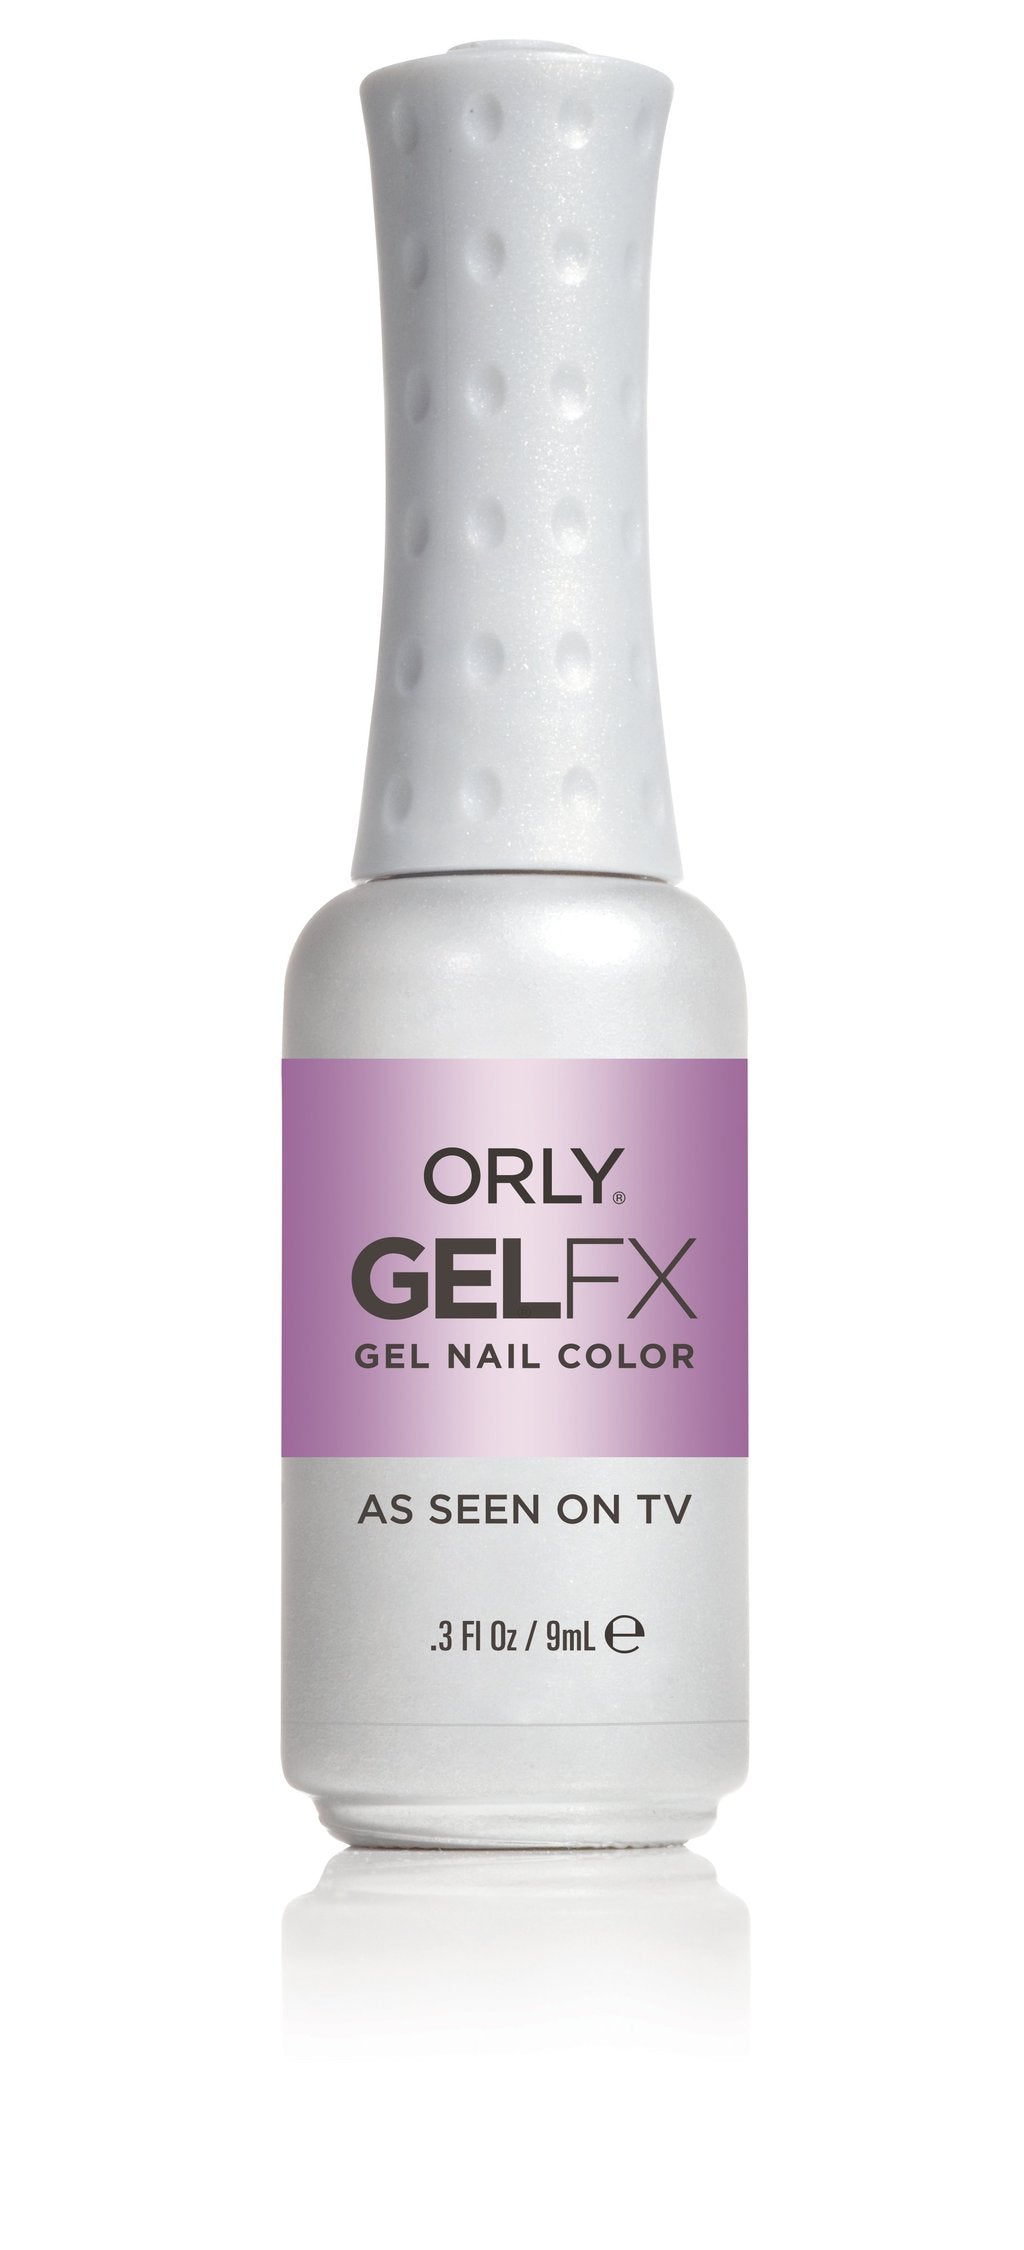 Orly GelFX As Seen On TV .3 fl oz 30922